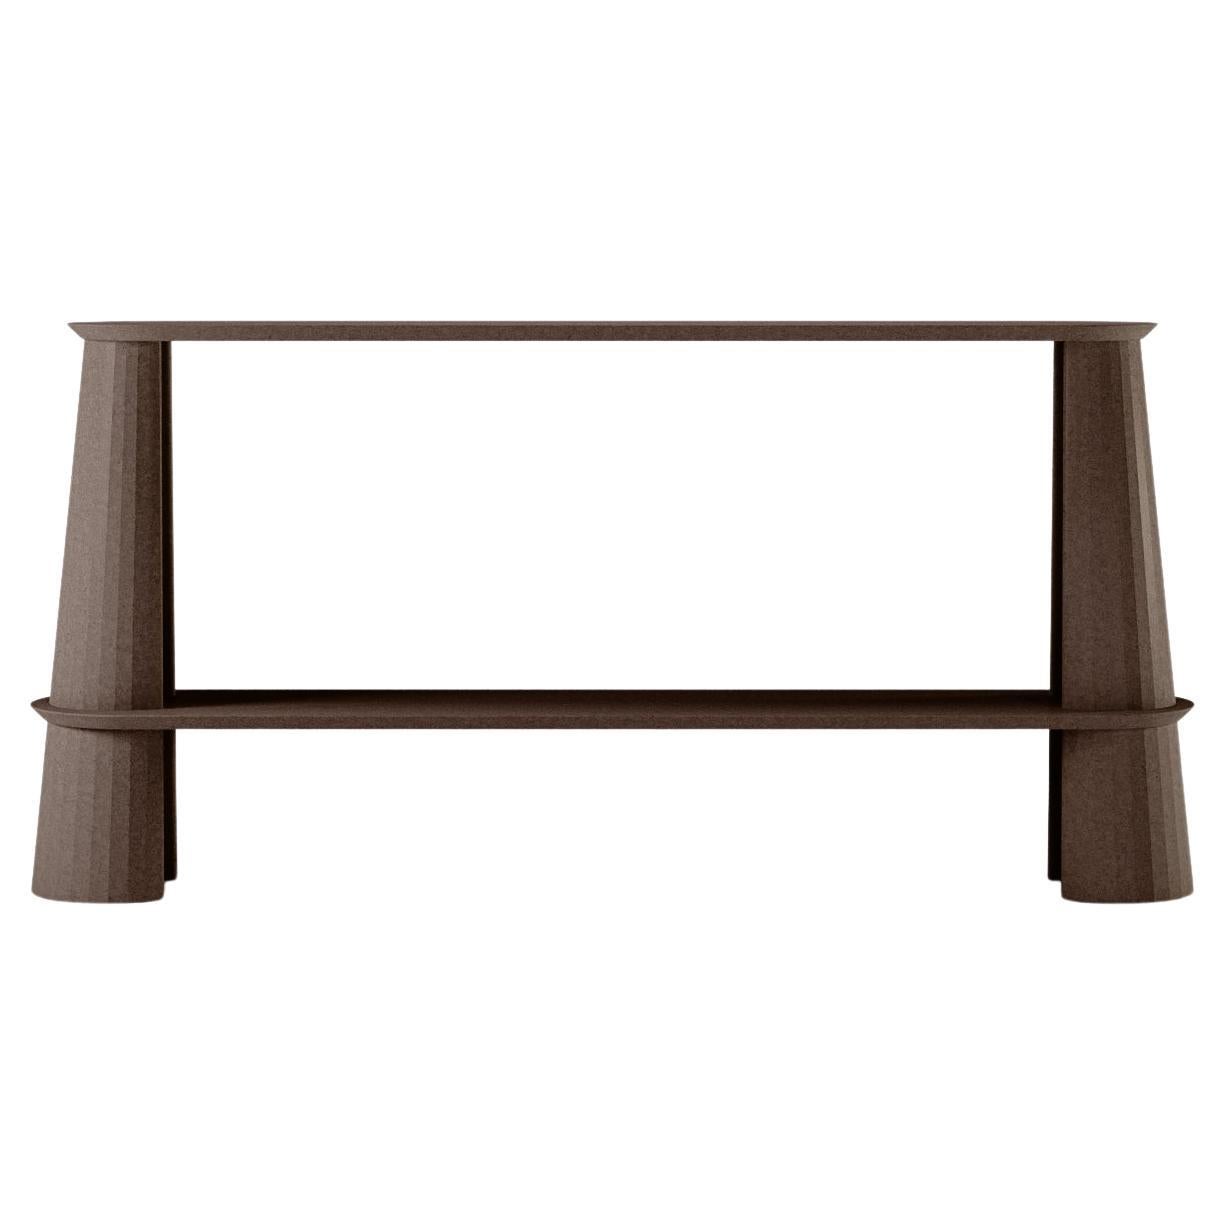 21st Century Studio Irvine Fusto Side Console Table Concrete Cement Brown Color For Sale